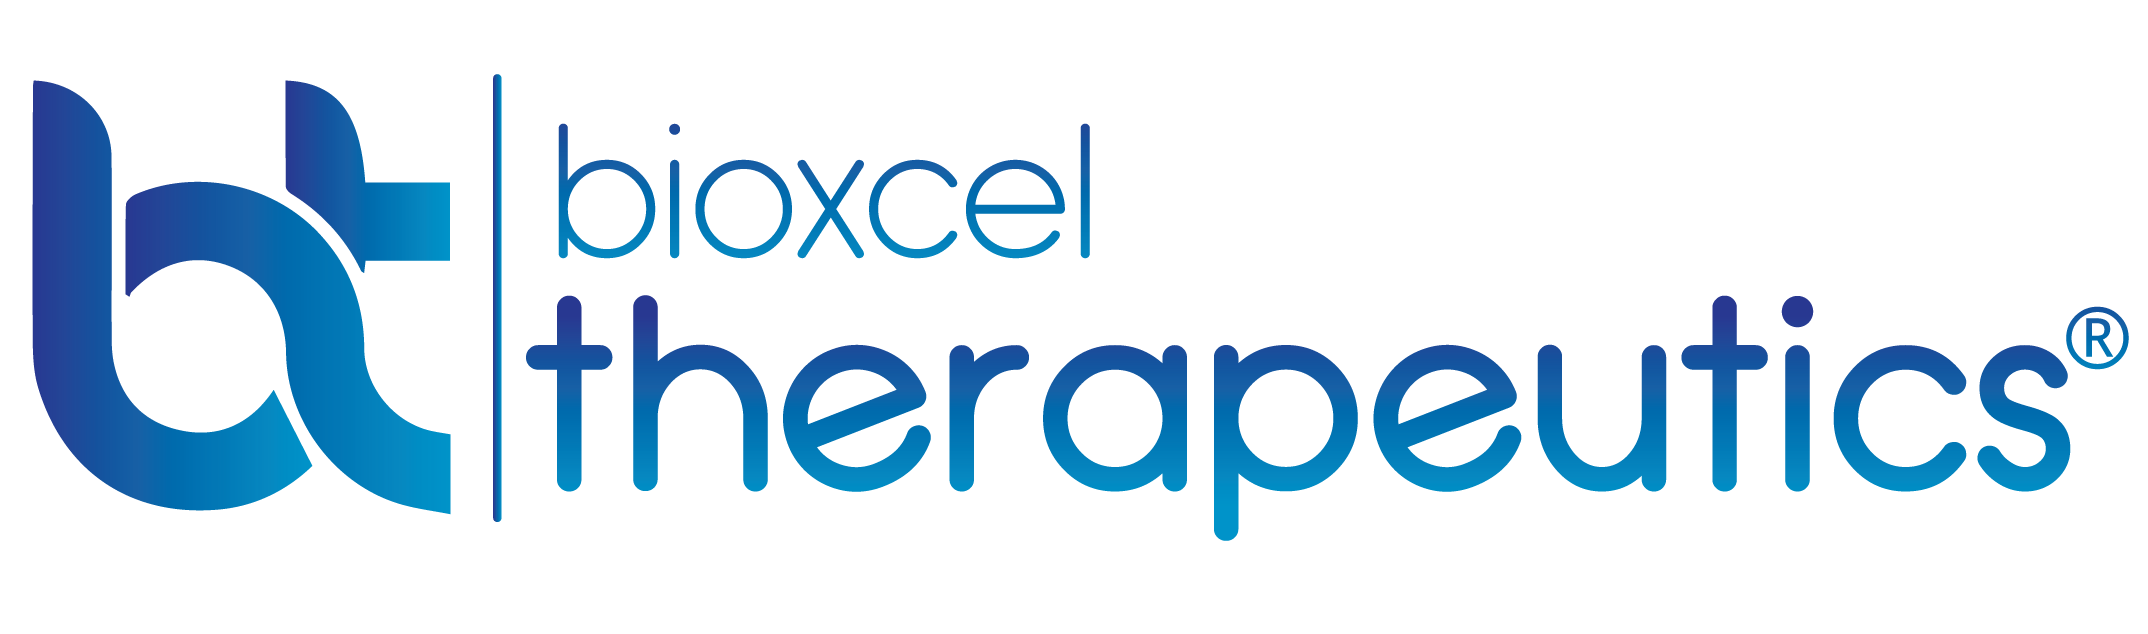 Bioxcel Therapeutics Logo